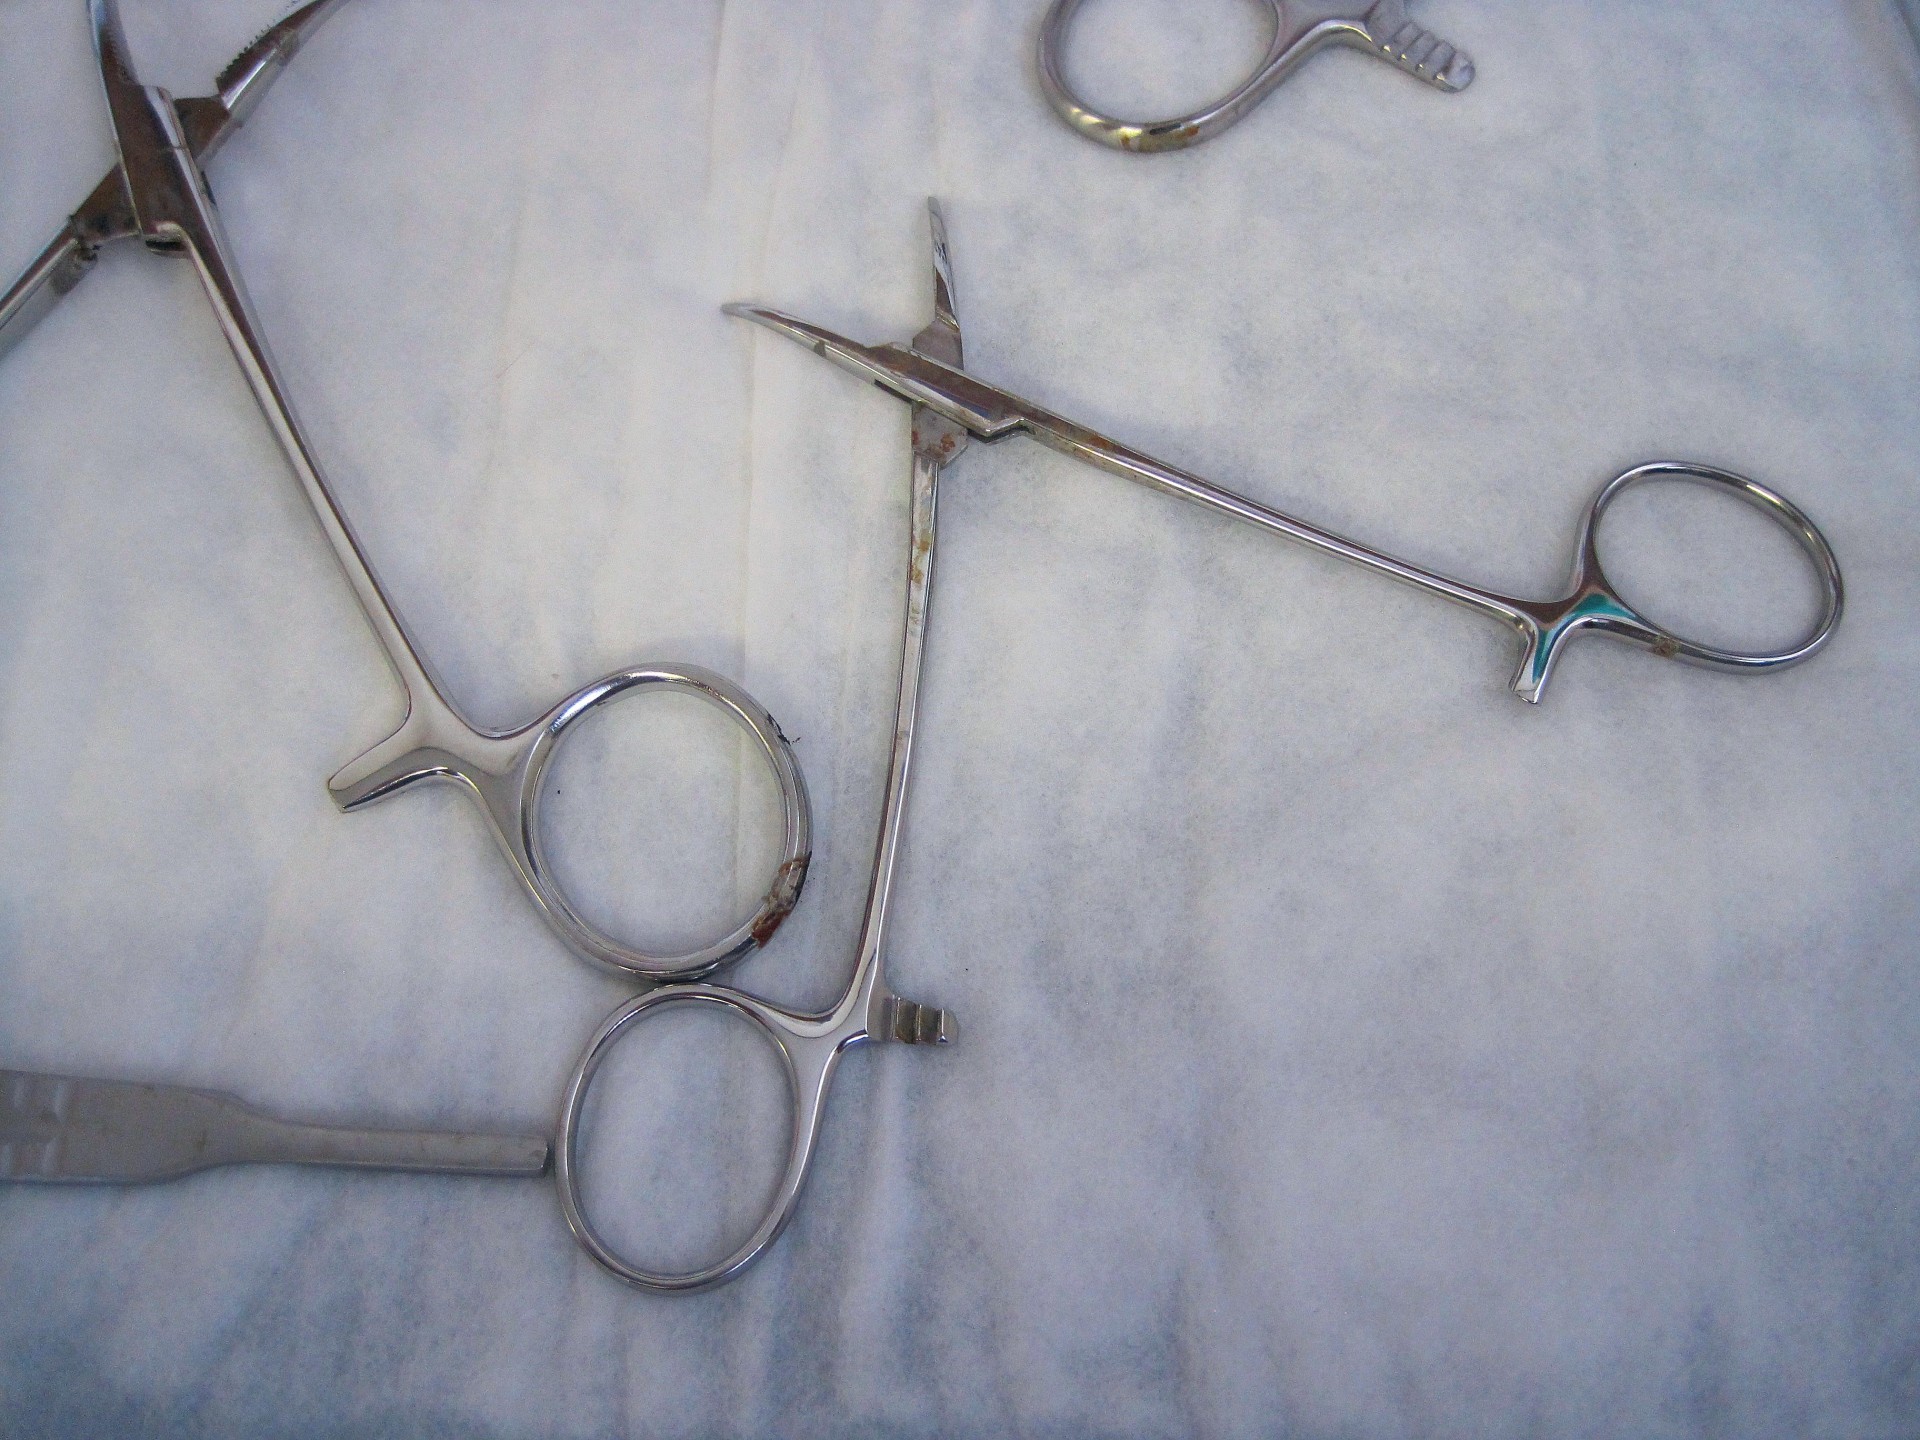 instruments metal medical free photo